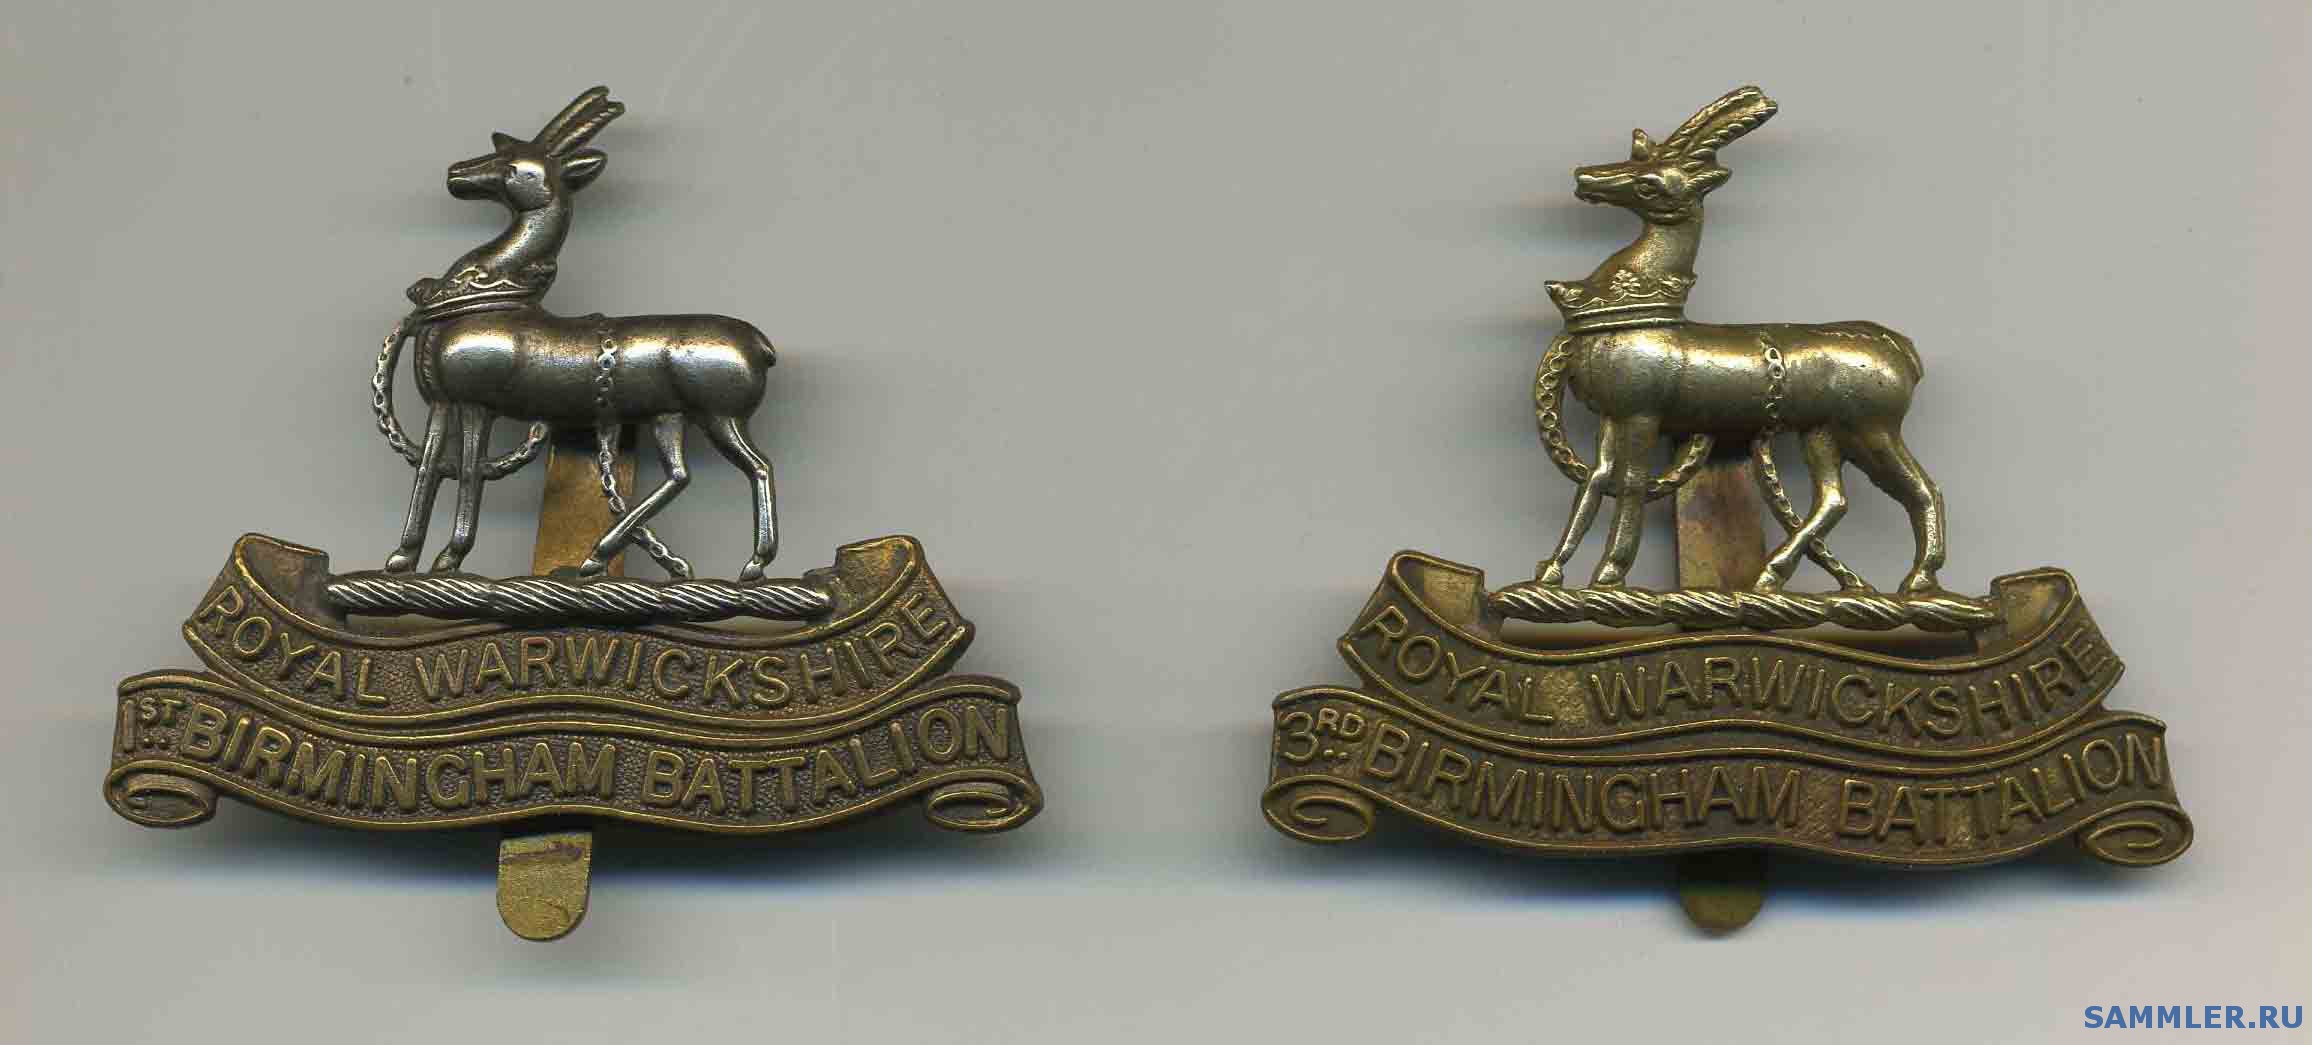 Warwikshire_reg_1st___3rd_Birmingham_Battalion.jpg